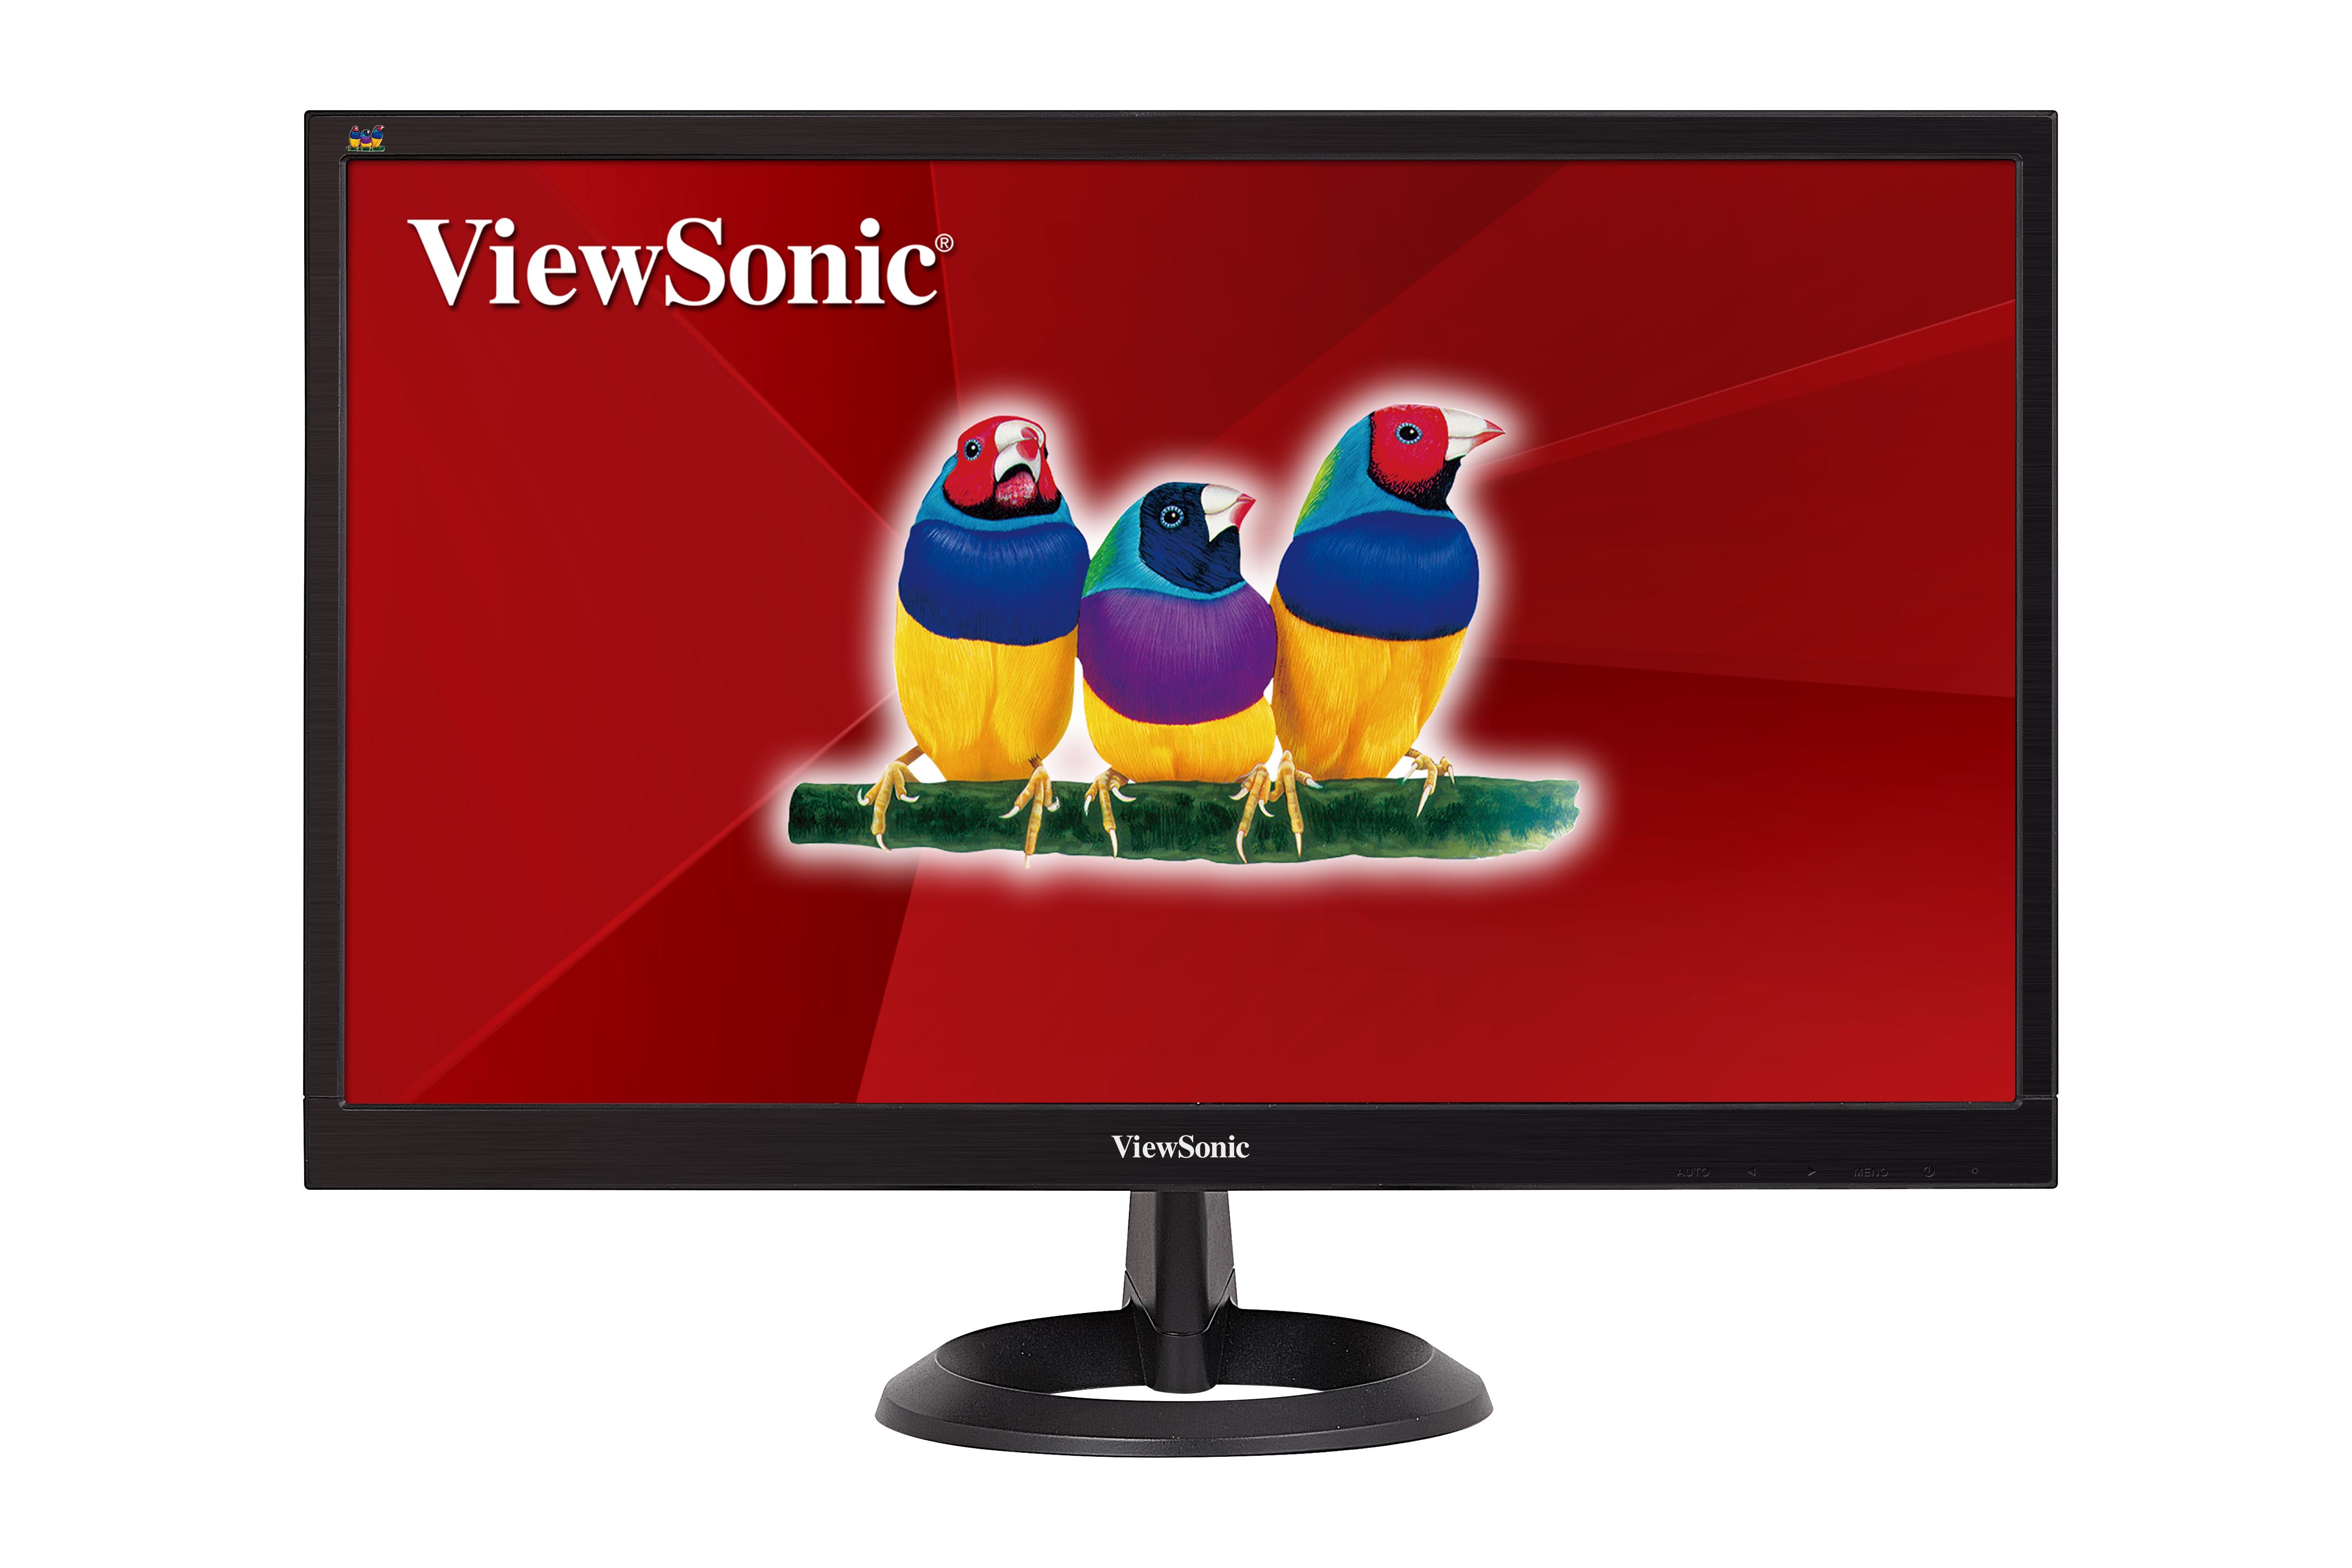 Install Viewsonic Monitor Drivers